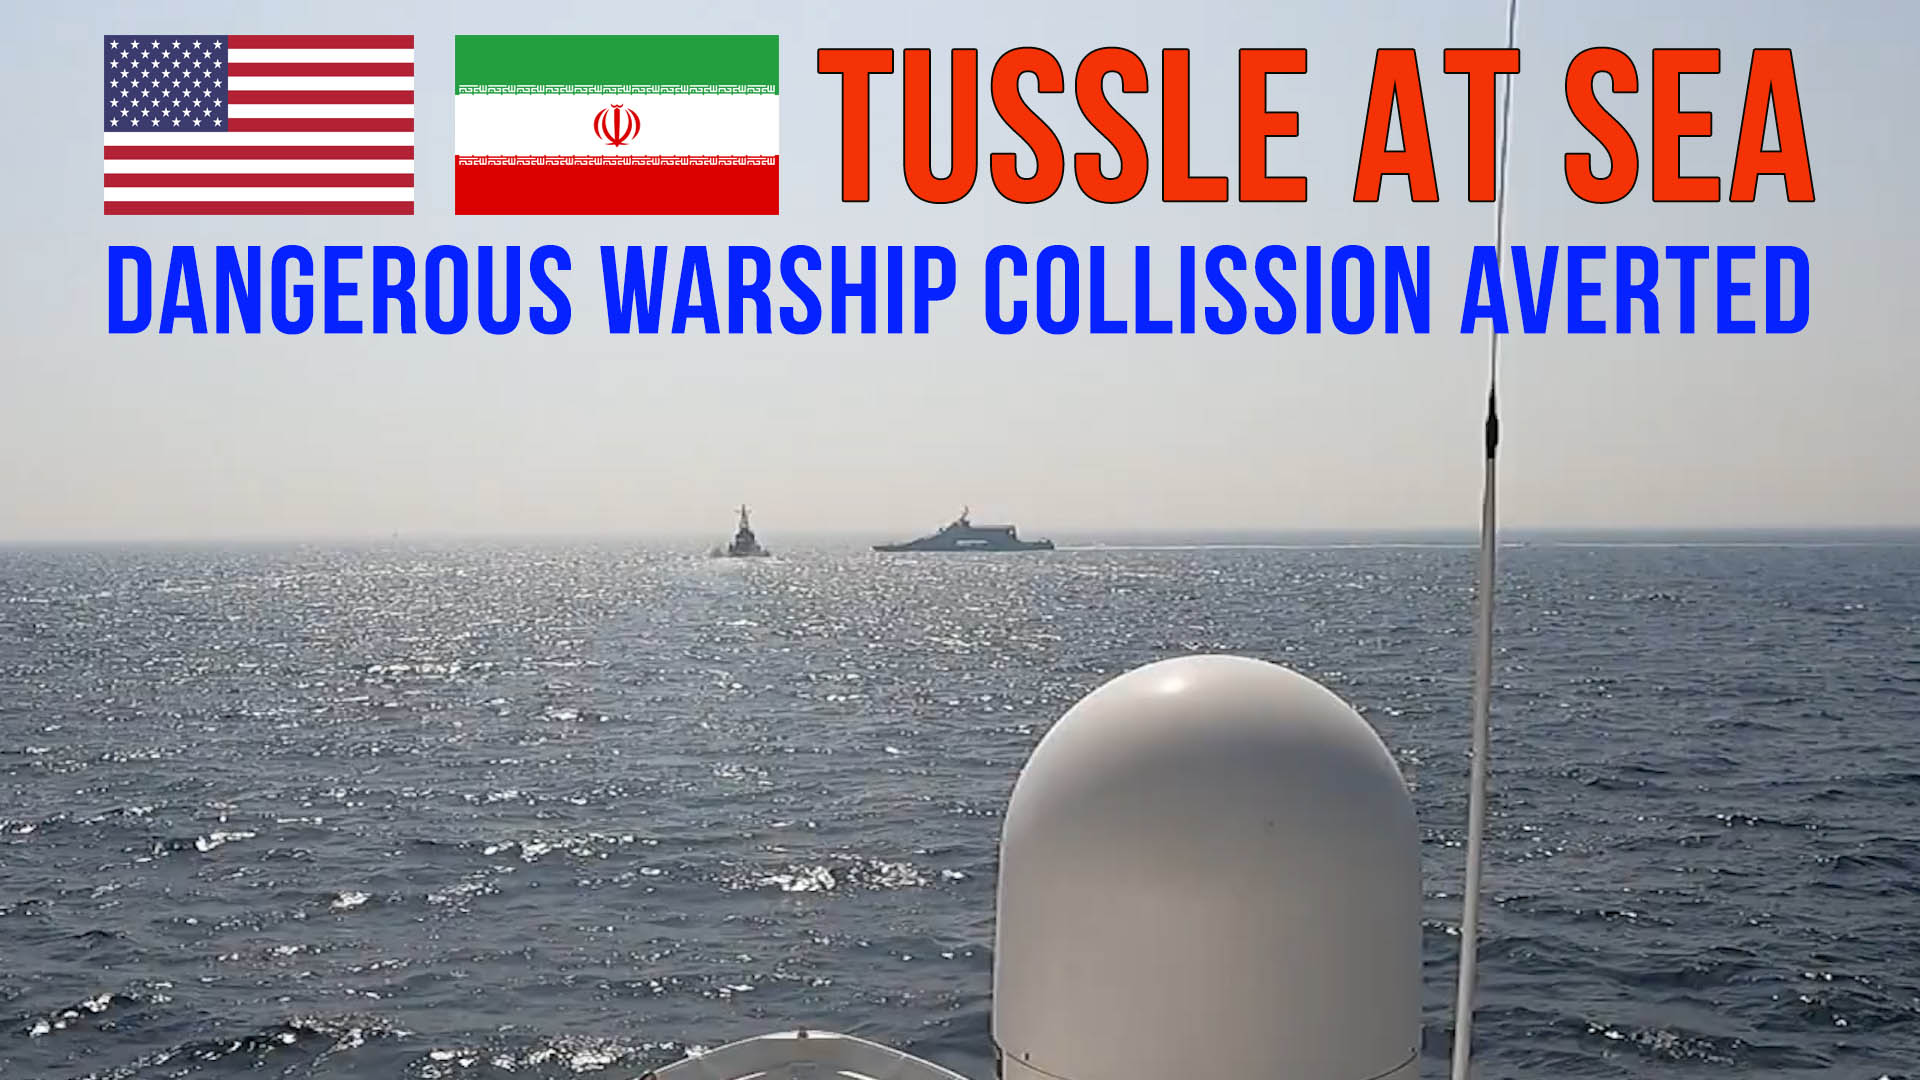 US navy- Iran navy tussle at sea- collision averted